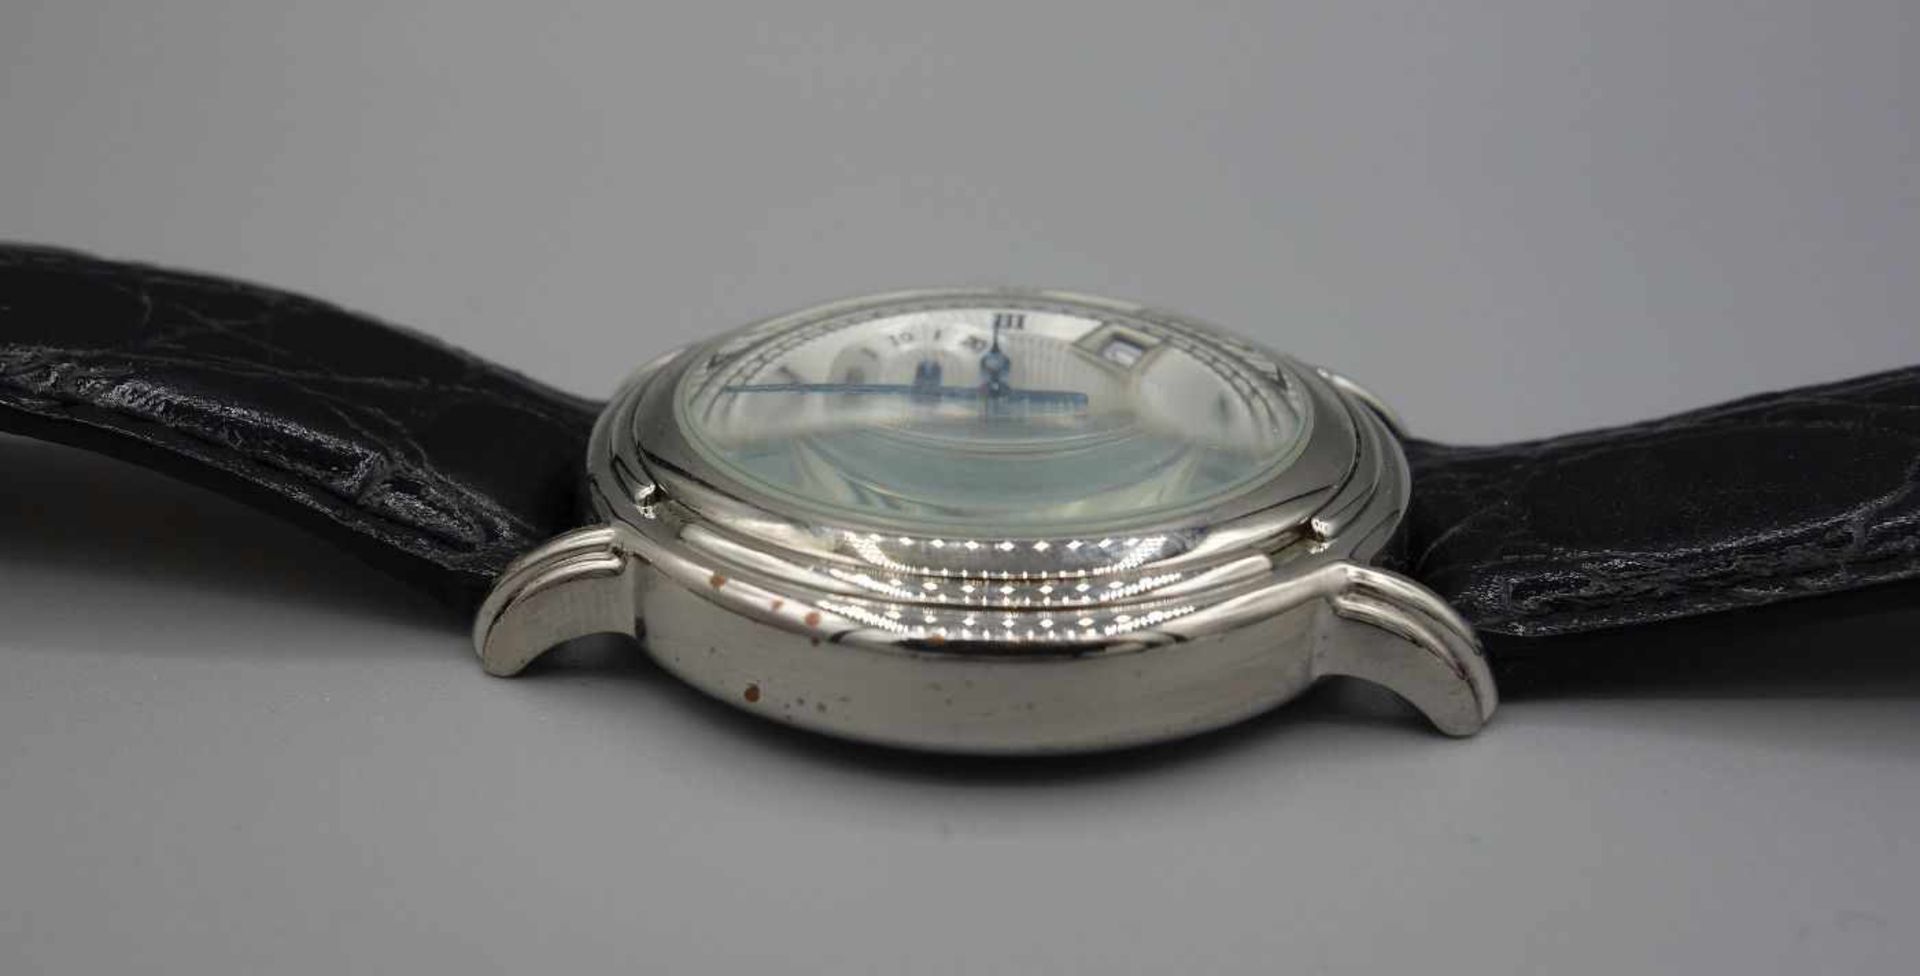 ARMBANDUHR / CHRONOGRAPH: Principle / wristwatch, Quartz-Uhr, Manufaktur Krug-Bäumen, Modell " - Image 3 of 7